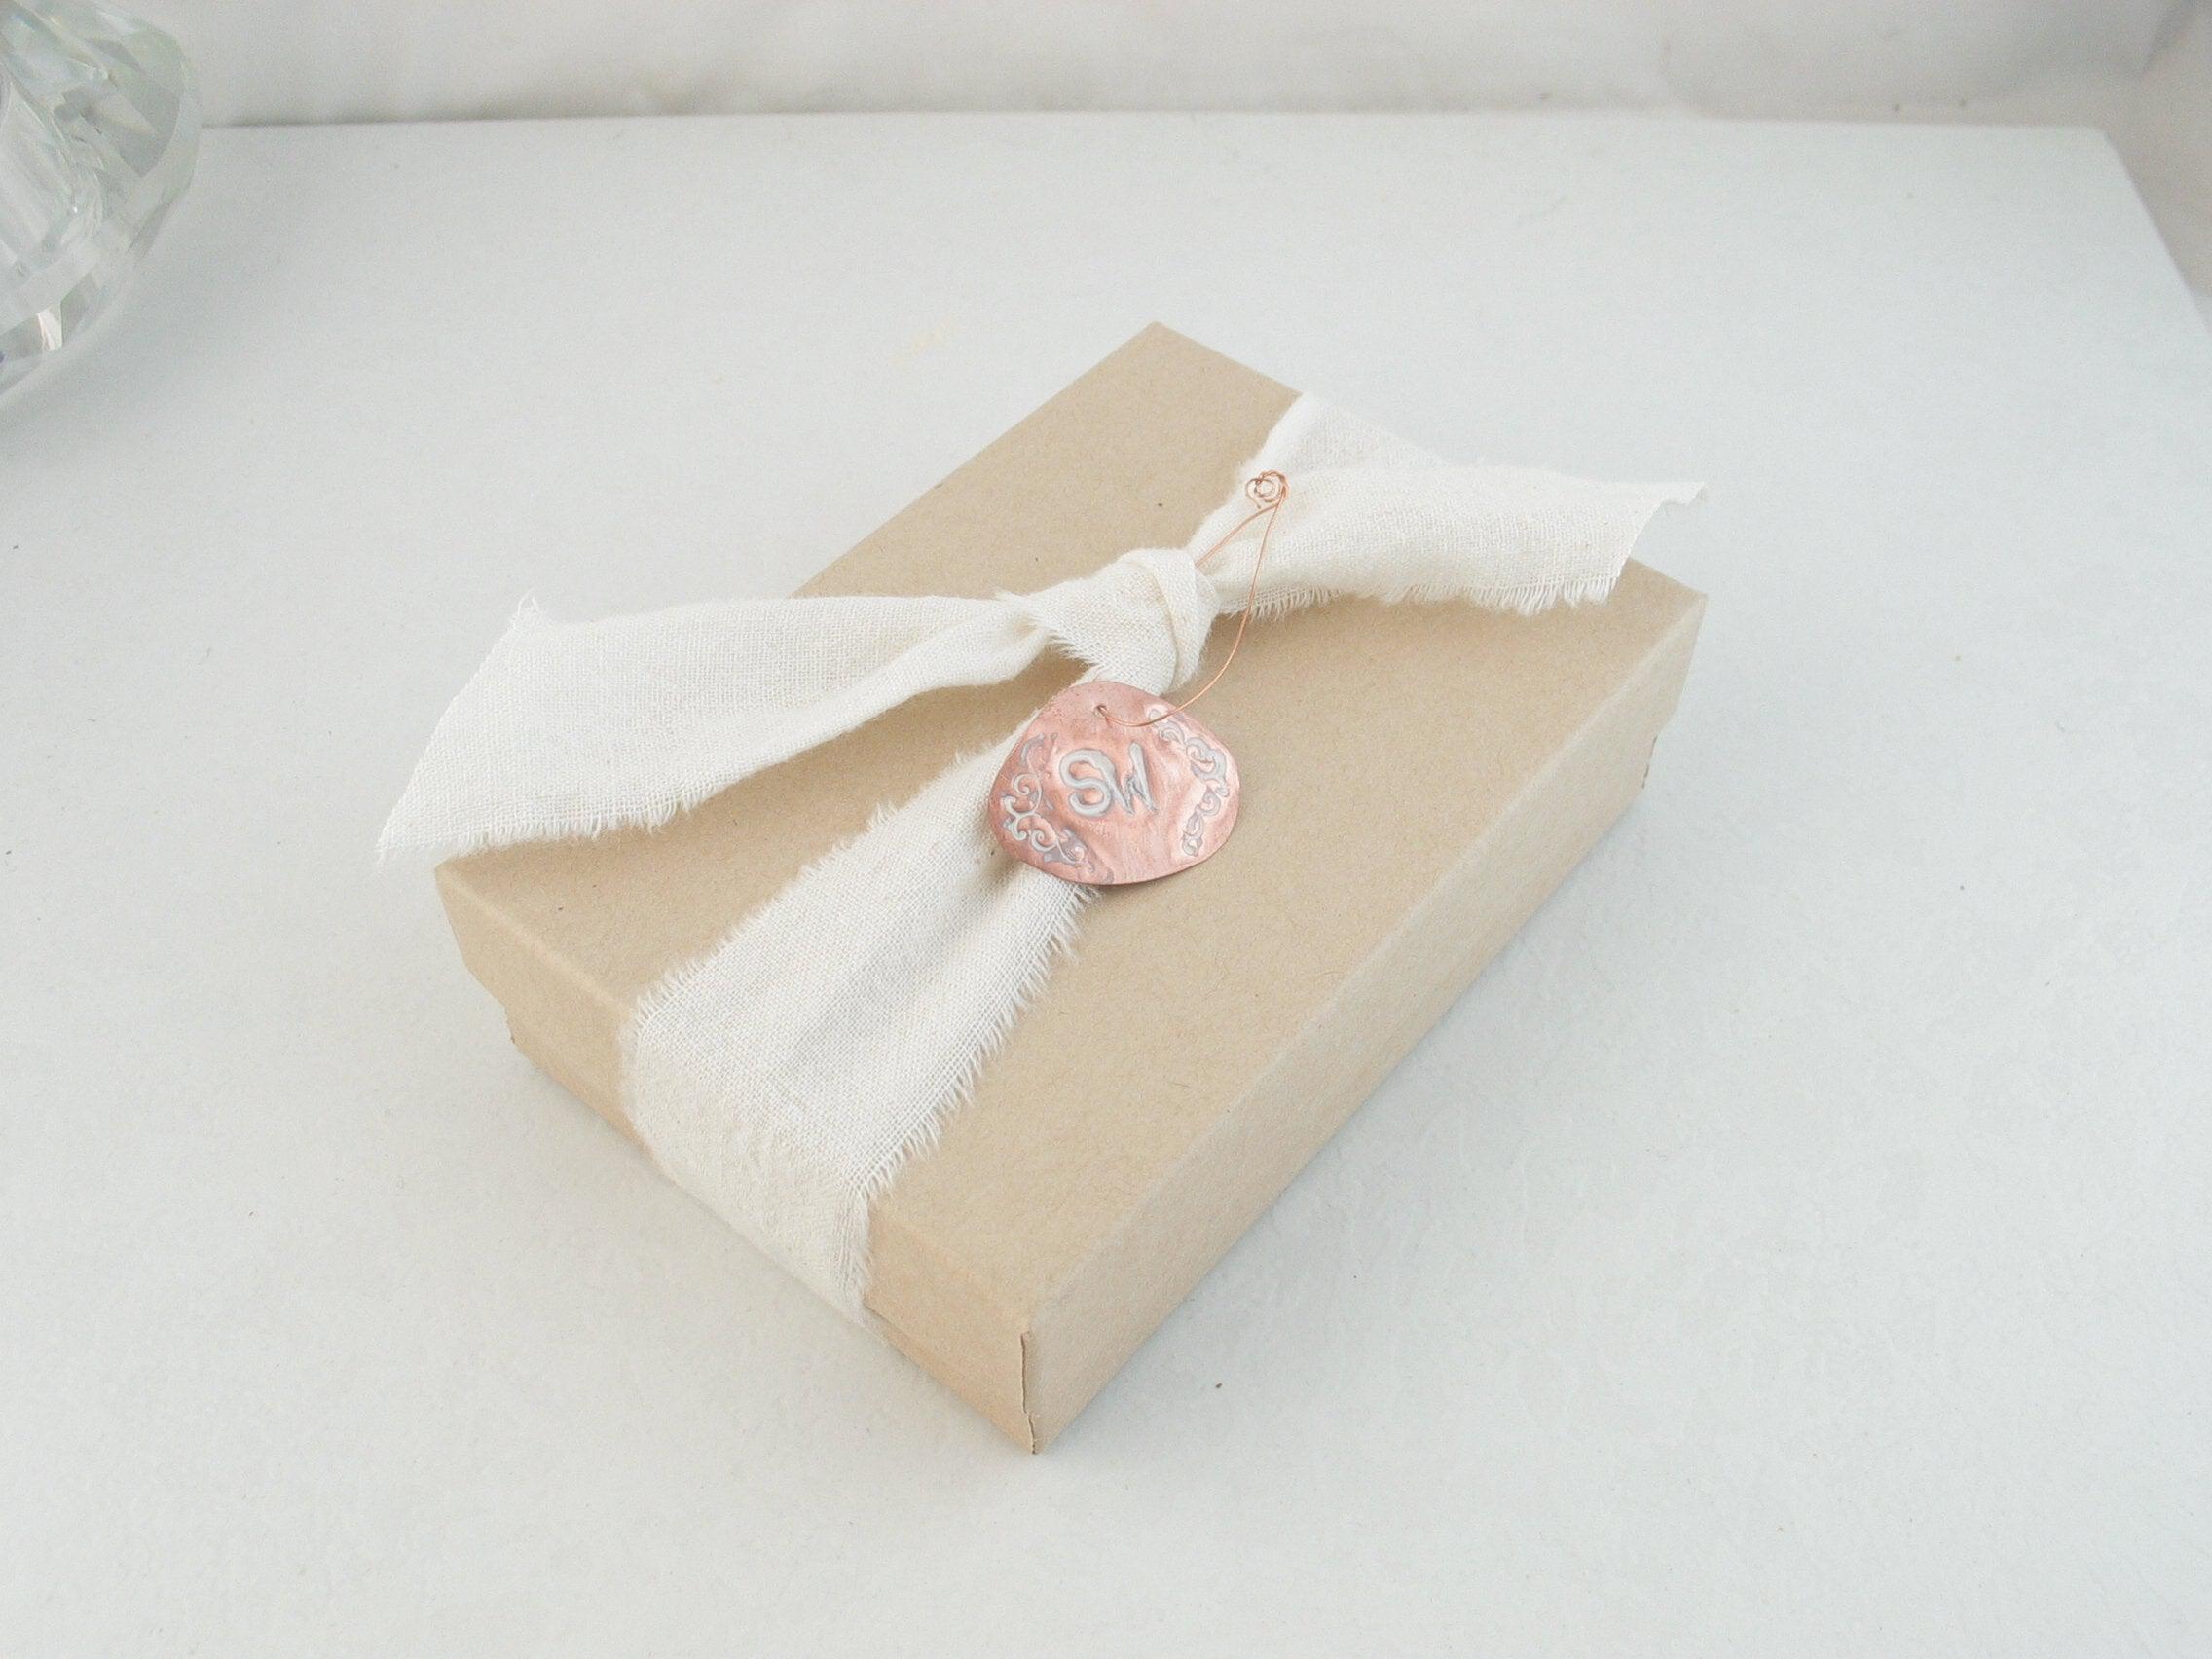 goimagine gift wrapped box